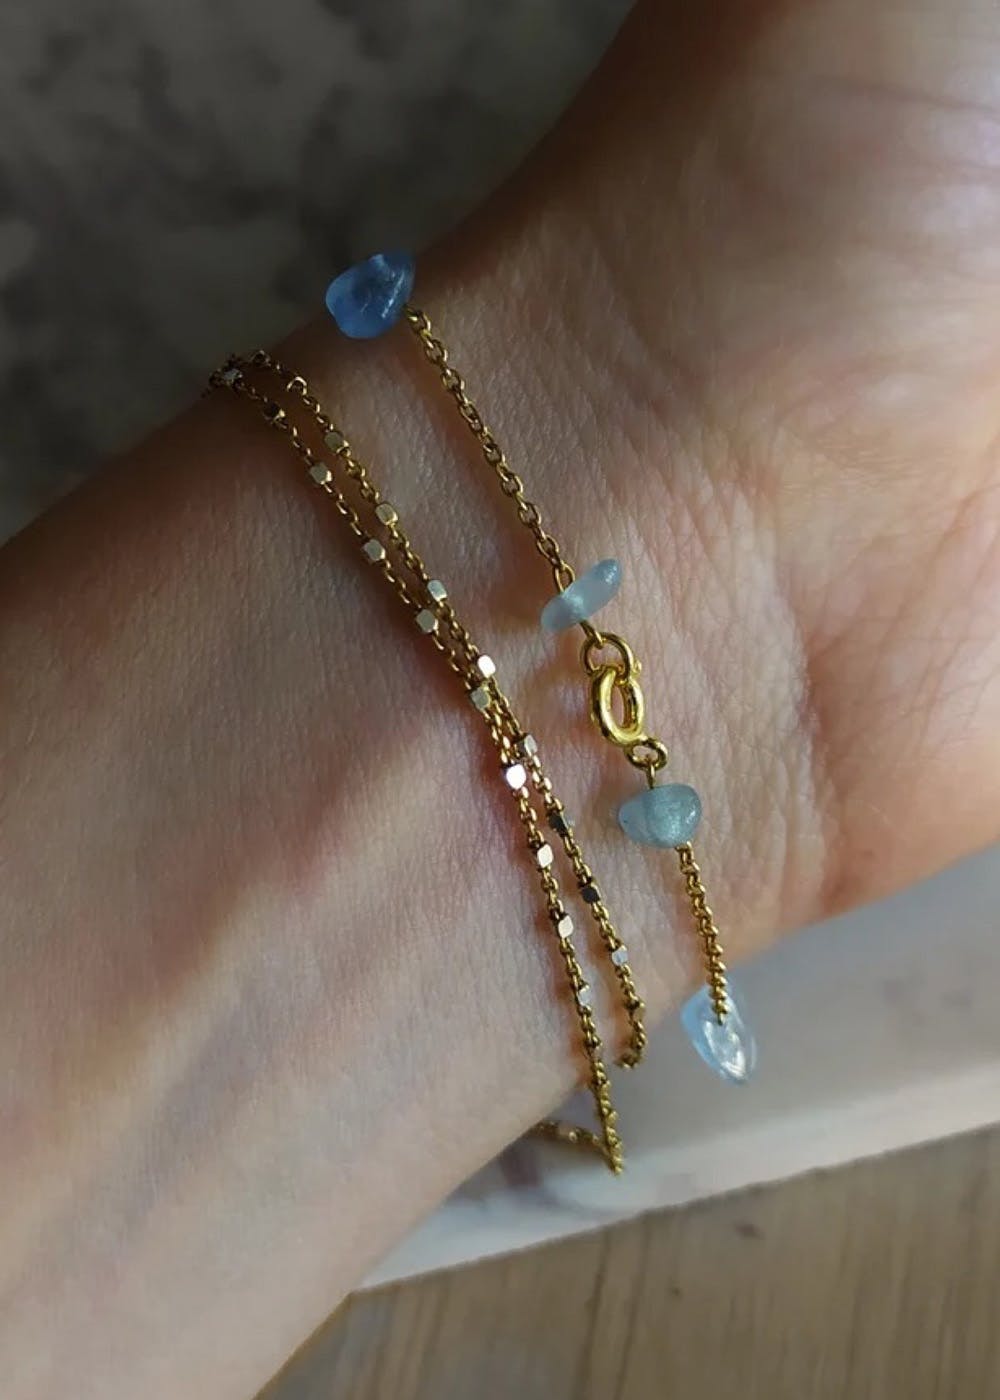 Round Aquamarine and Diamond White Gold Bracelet | Lee Michaels Fine Jewelry